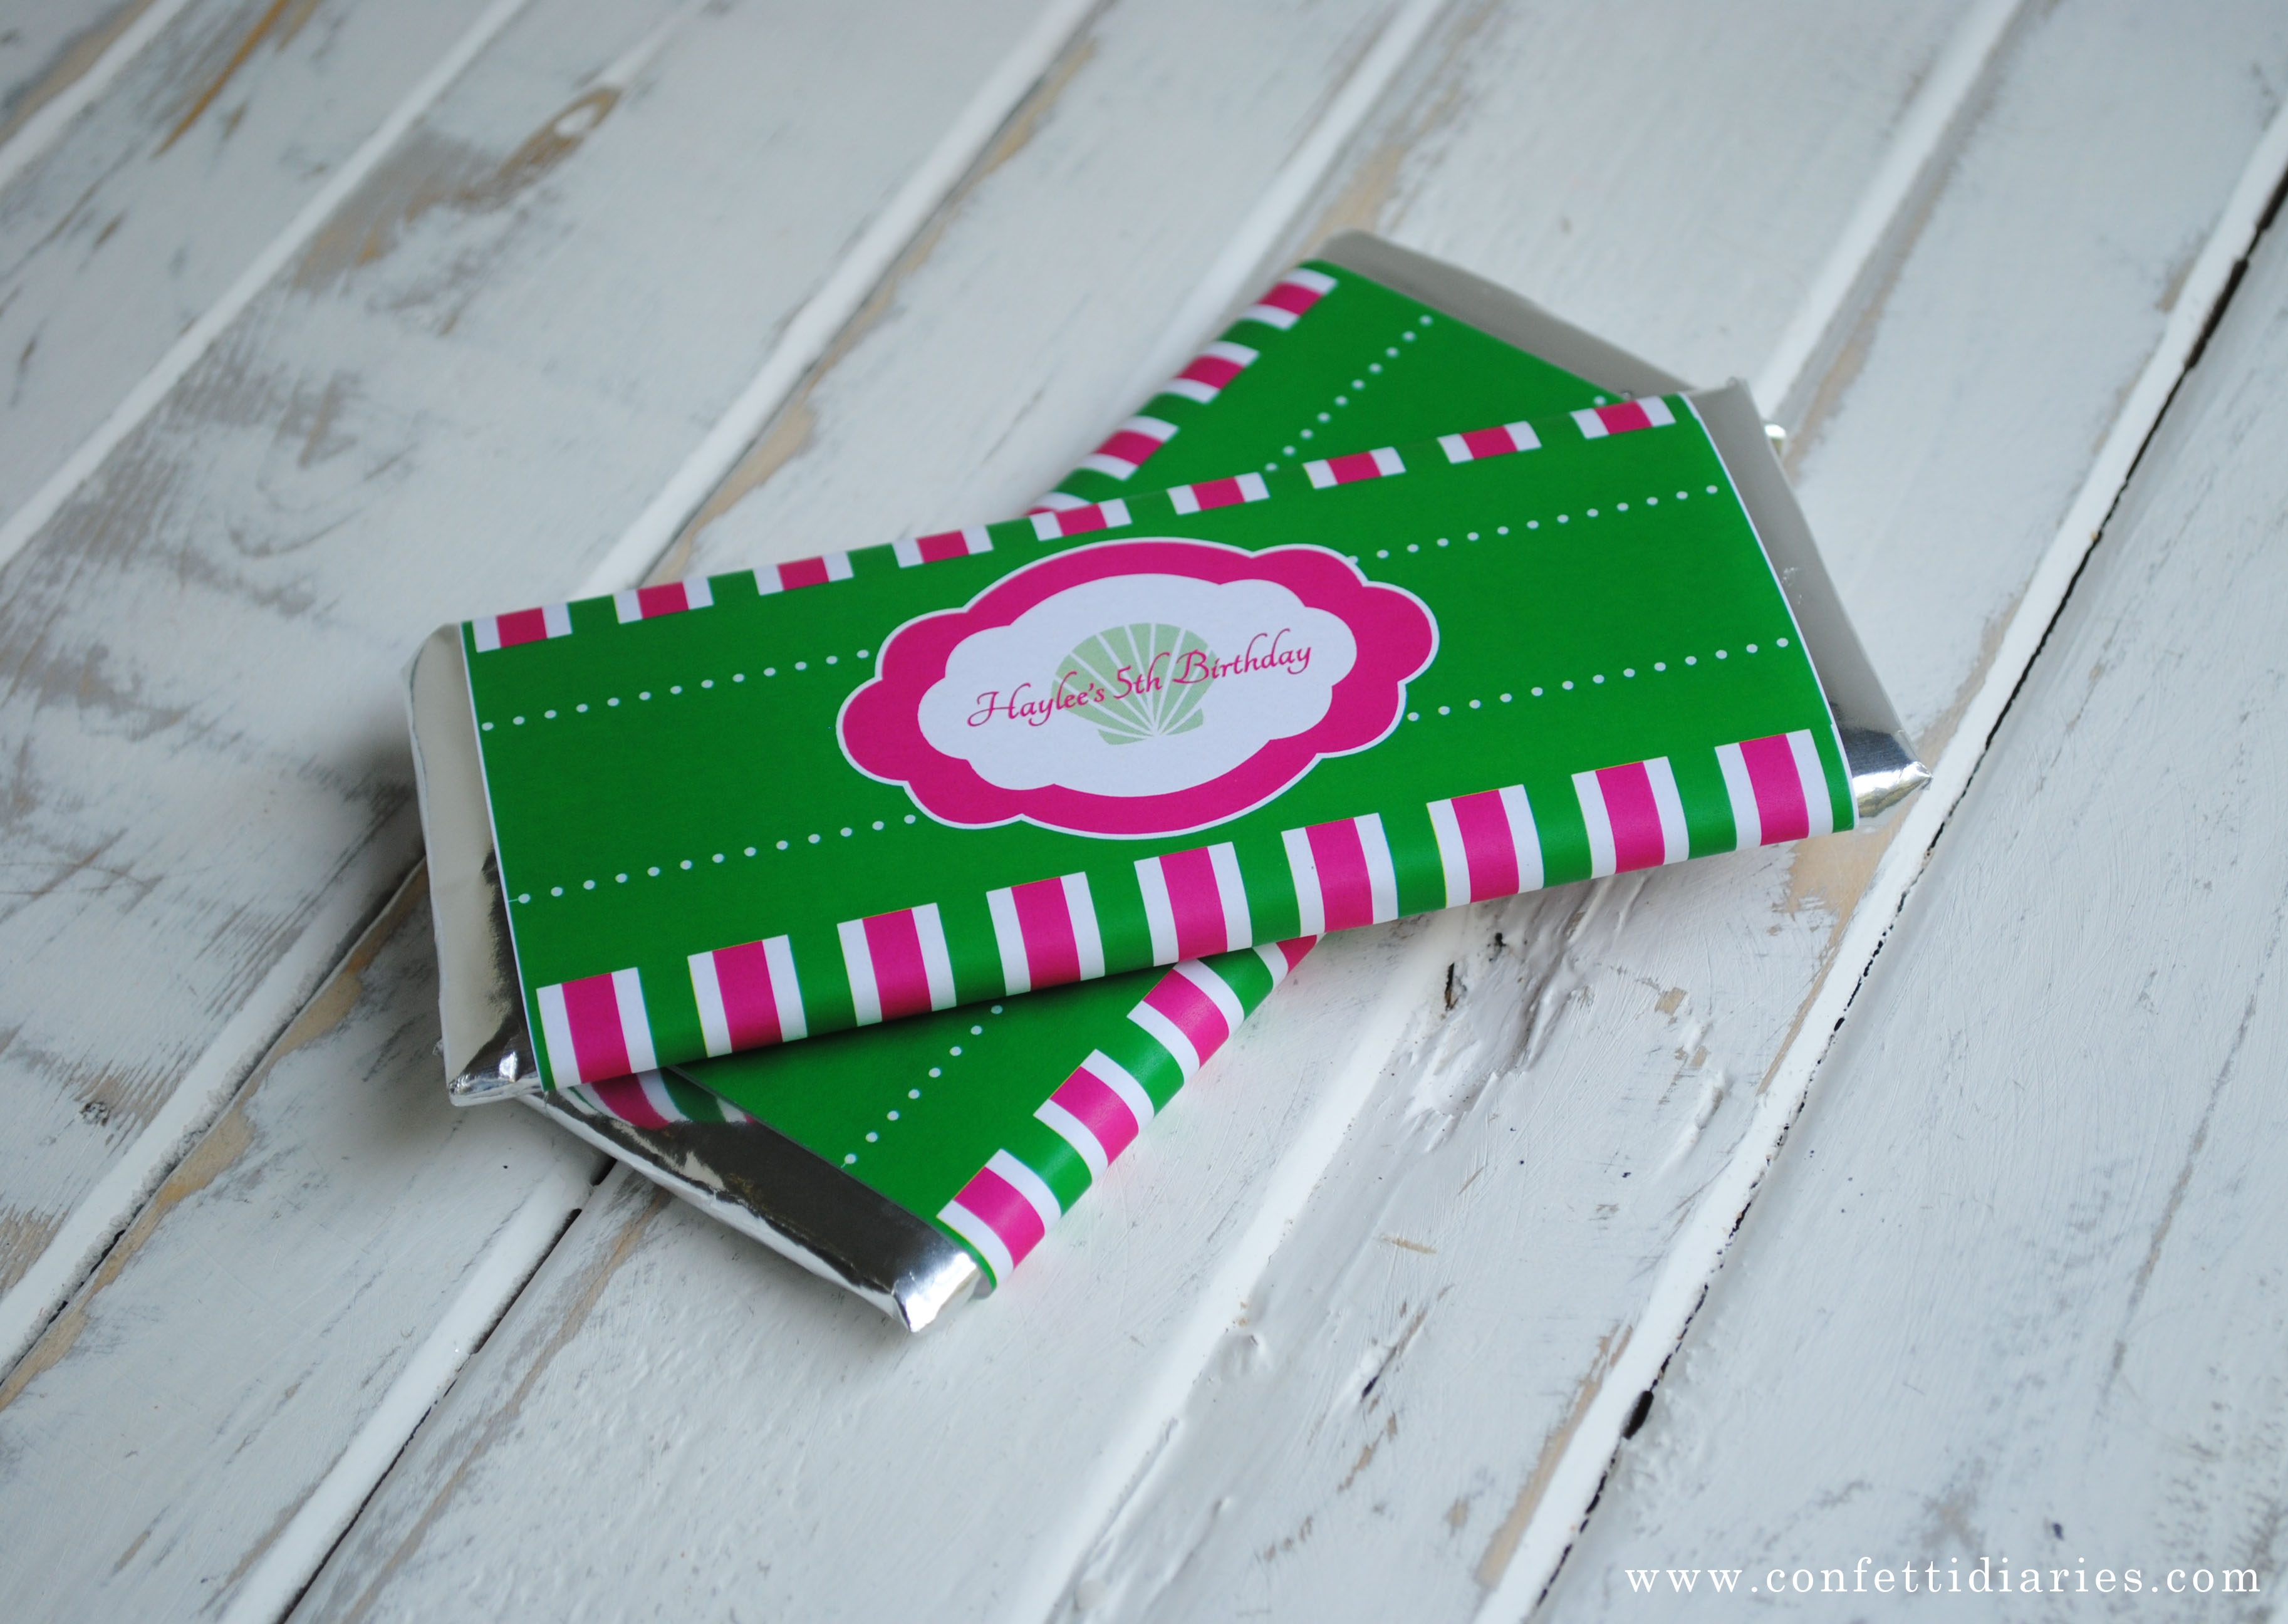 mini candy bar wrapper template